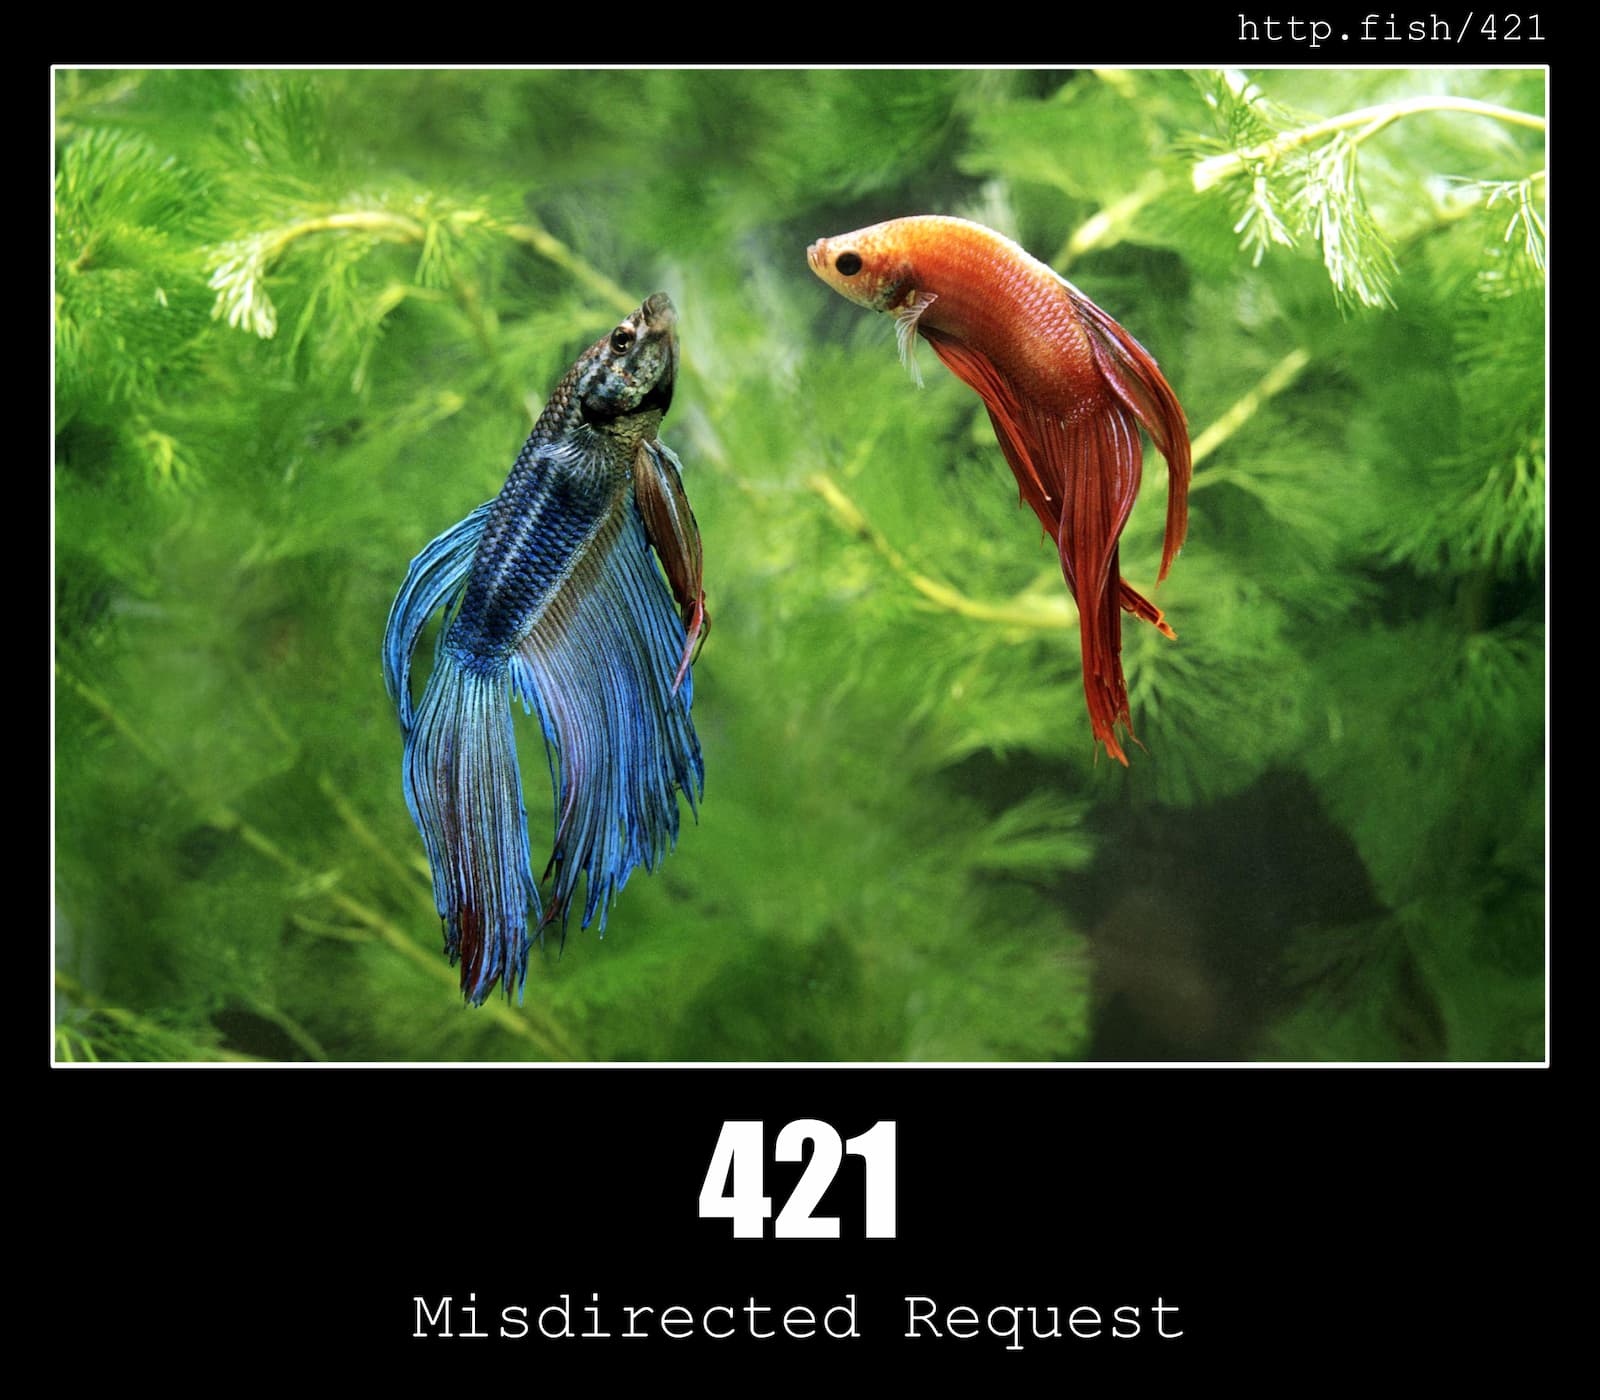 HTTP Status Code 421 Misdirected Request & Fish